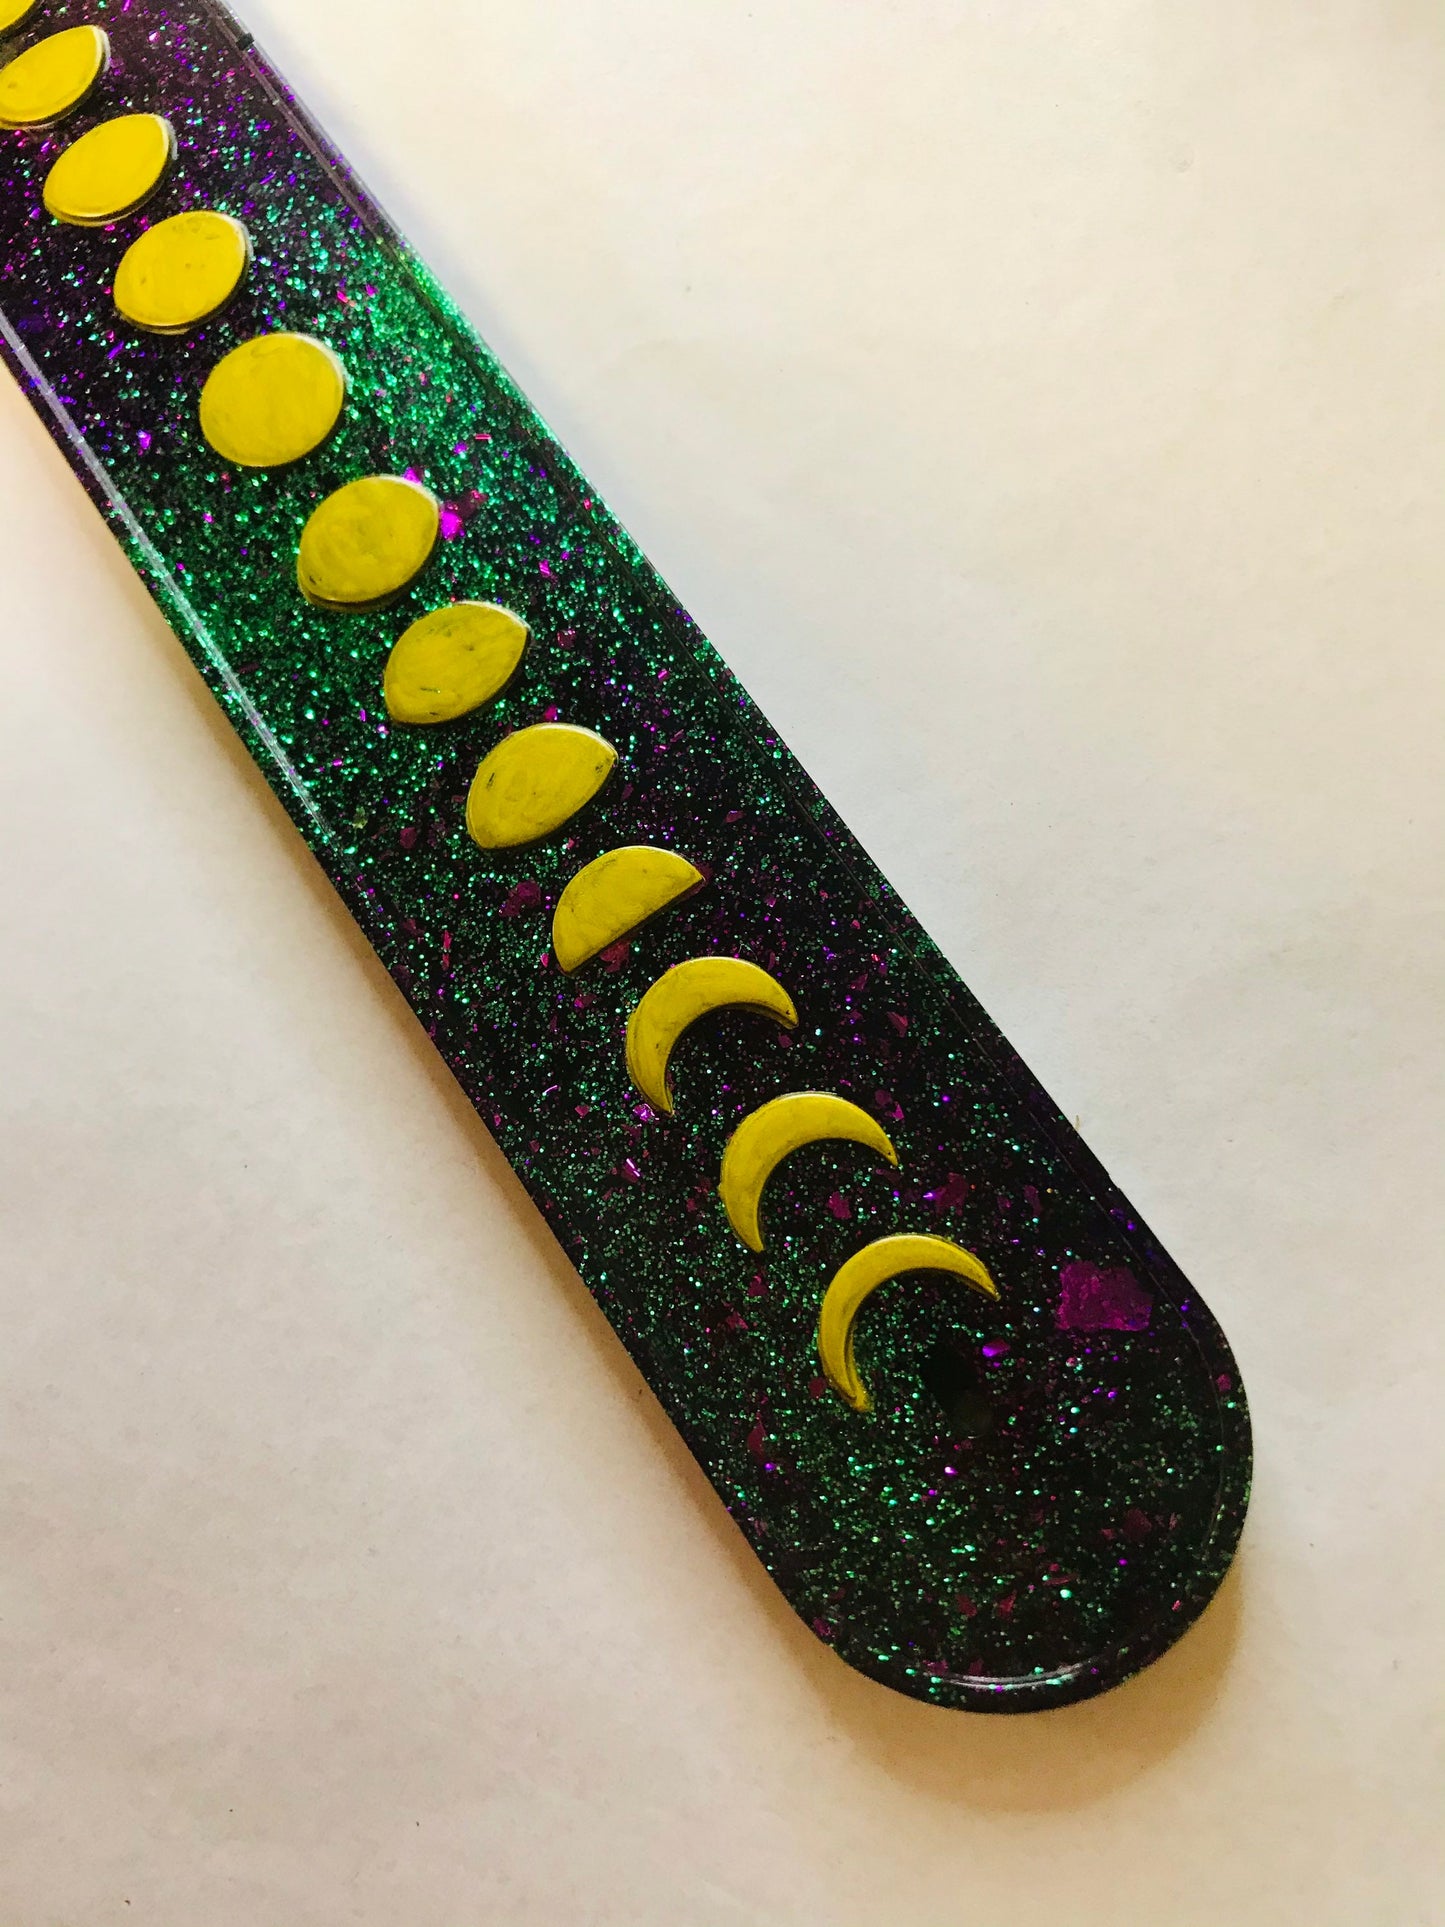 Lunar Incense Stick Burner, Purple and Green Resin Incense Holder, Moon Phases - Custom / Made to Order